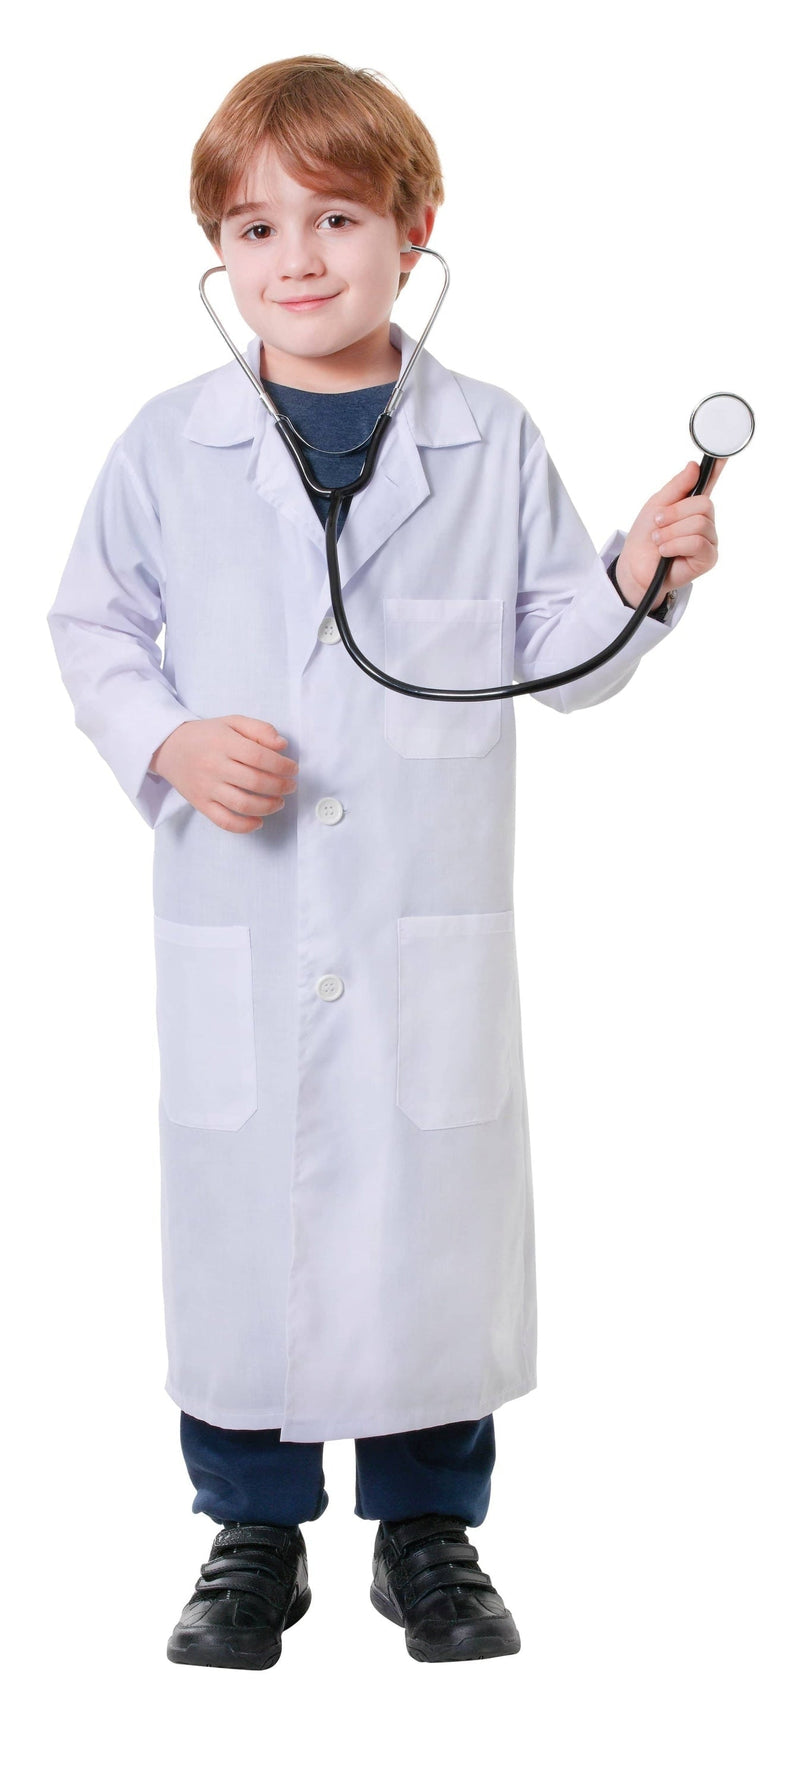 Doctor’s Coat Childrens Costume_1 CC309